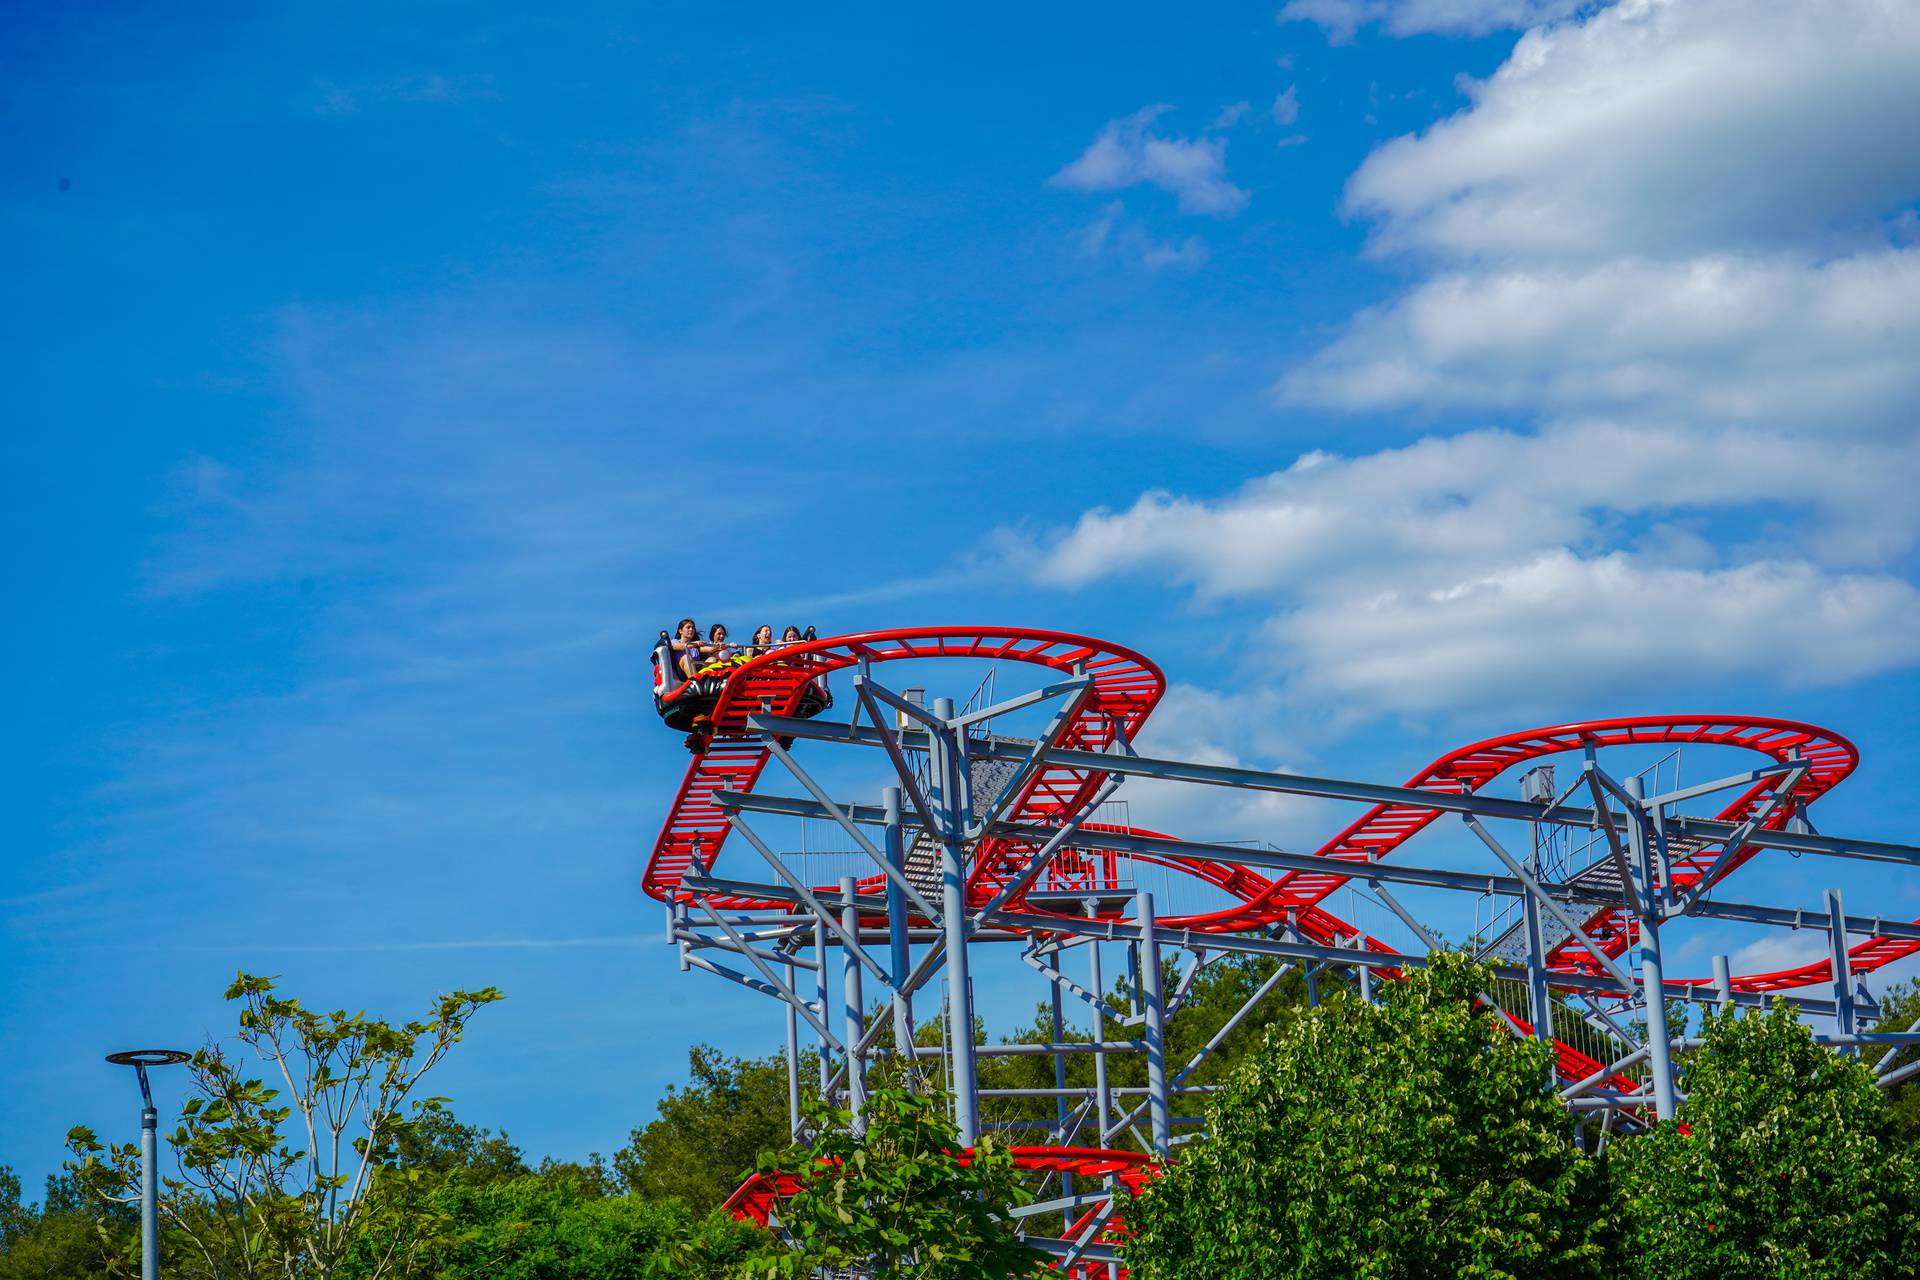 Kroz plave šine, rudnike, svemir ili u vodu? Roller Coasteri Fun Parka Biograd sve to mogu!